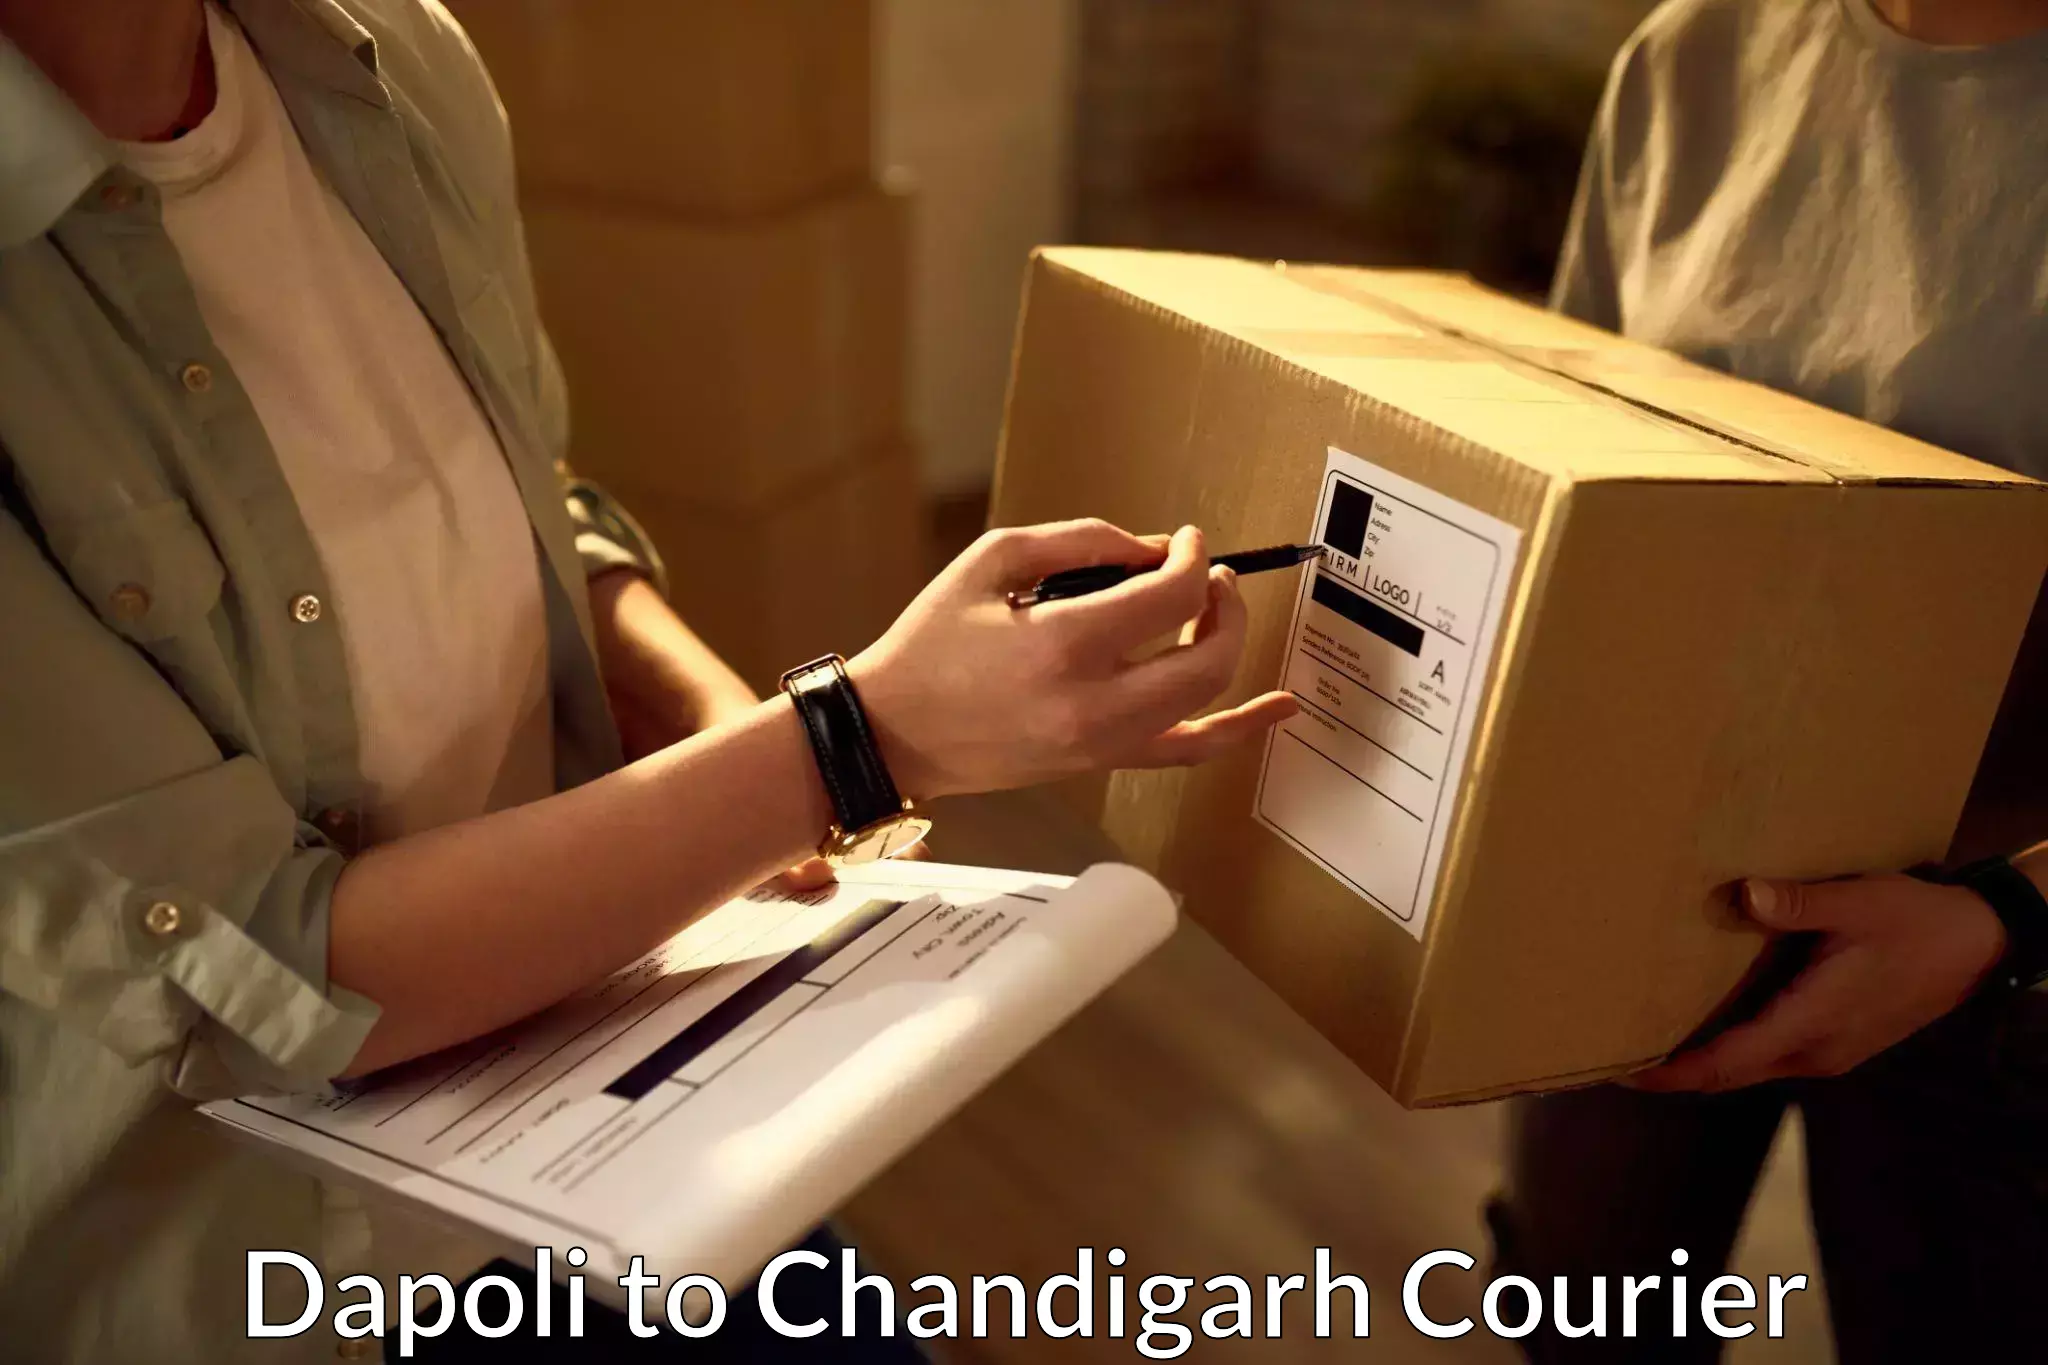 Express mail service Dapoli to Chandigarh